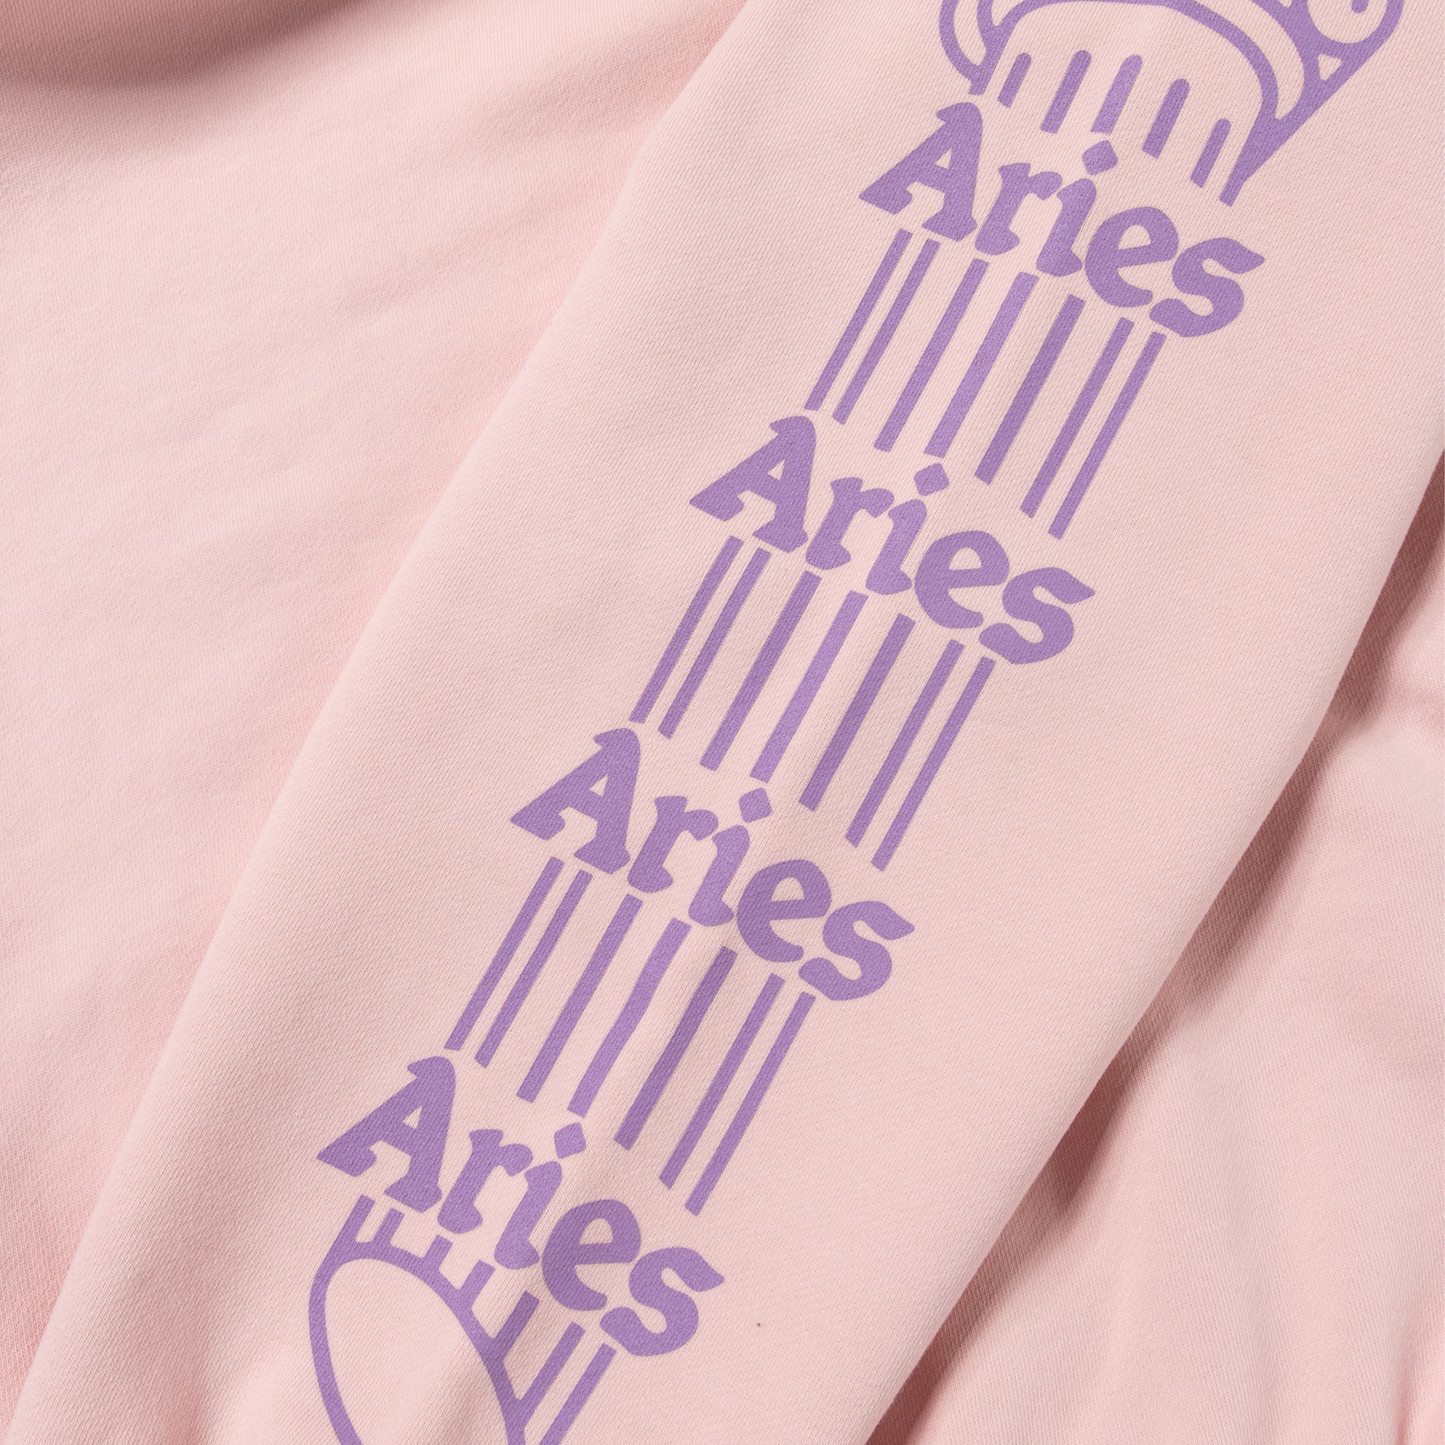 Aries Arise Column Sweatshirt